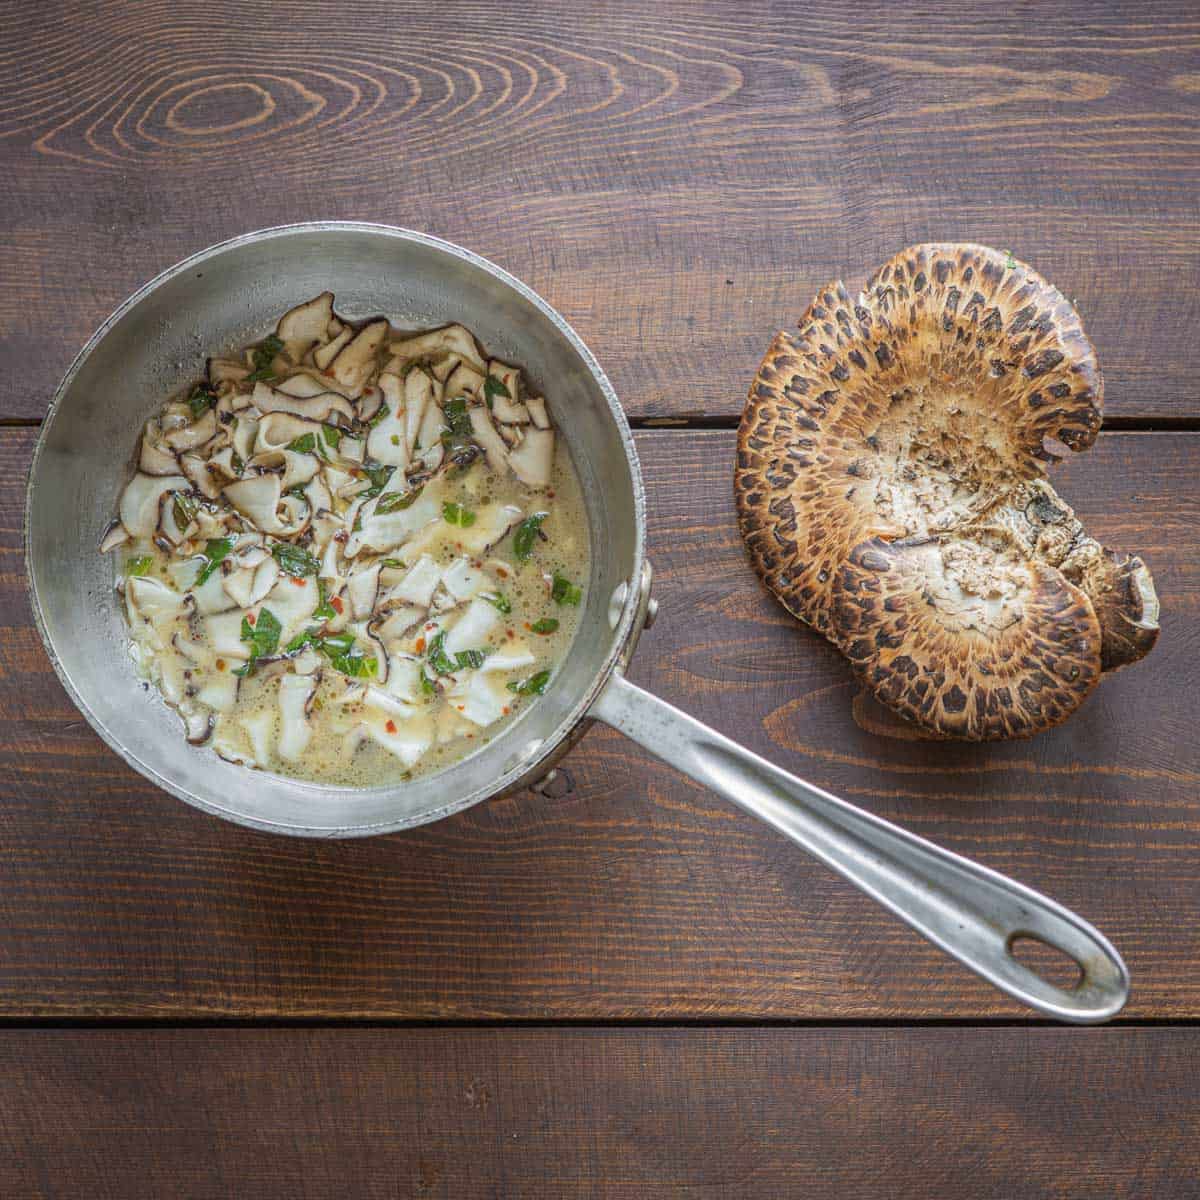 White wine pheasant back or dryad saddle mushrooms recipe with garlic and herbs